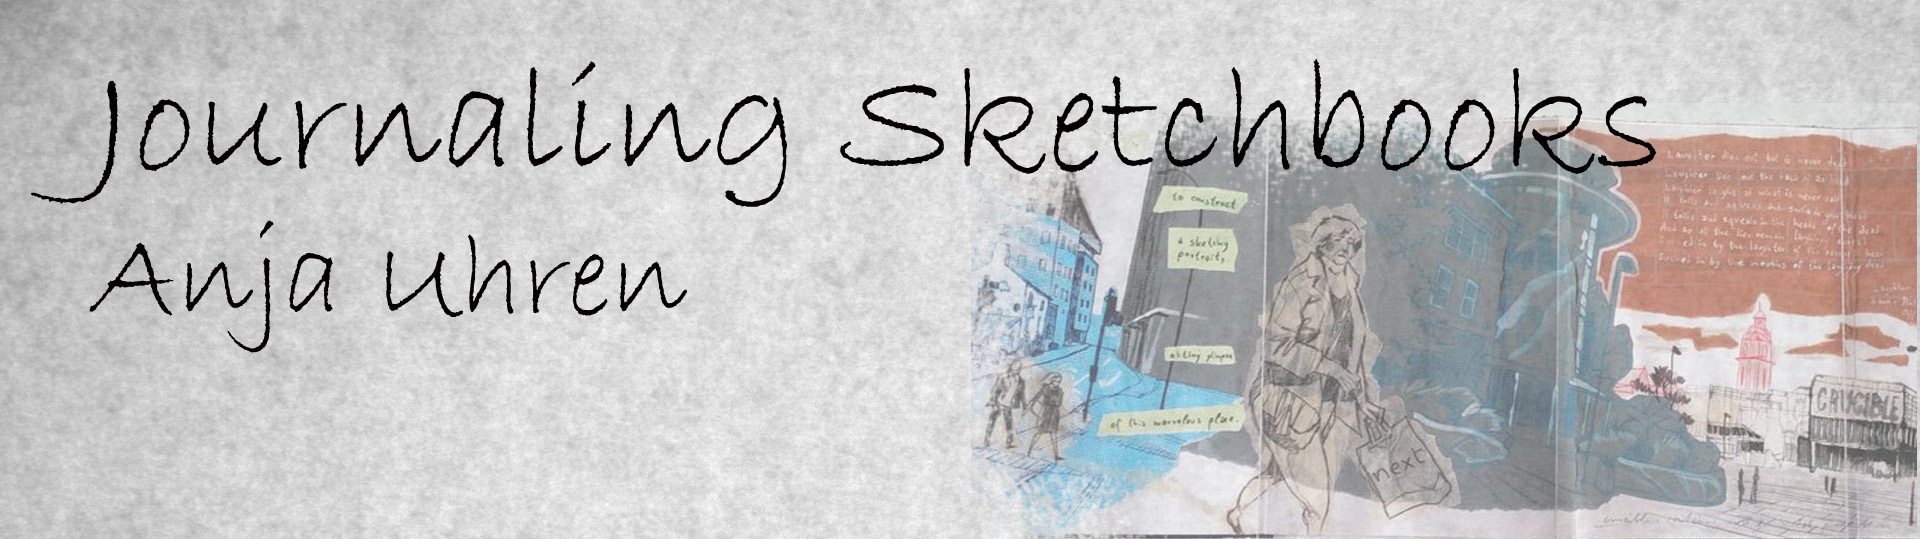 Journaling Sketchbooks